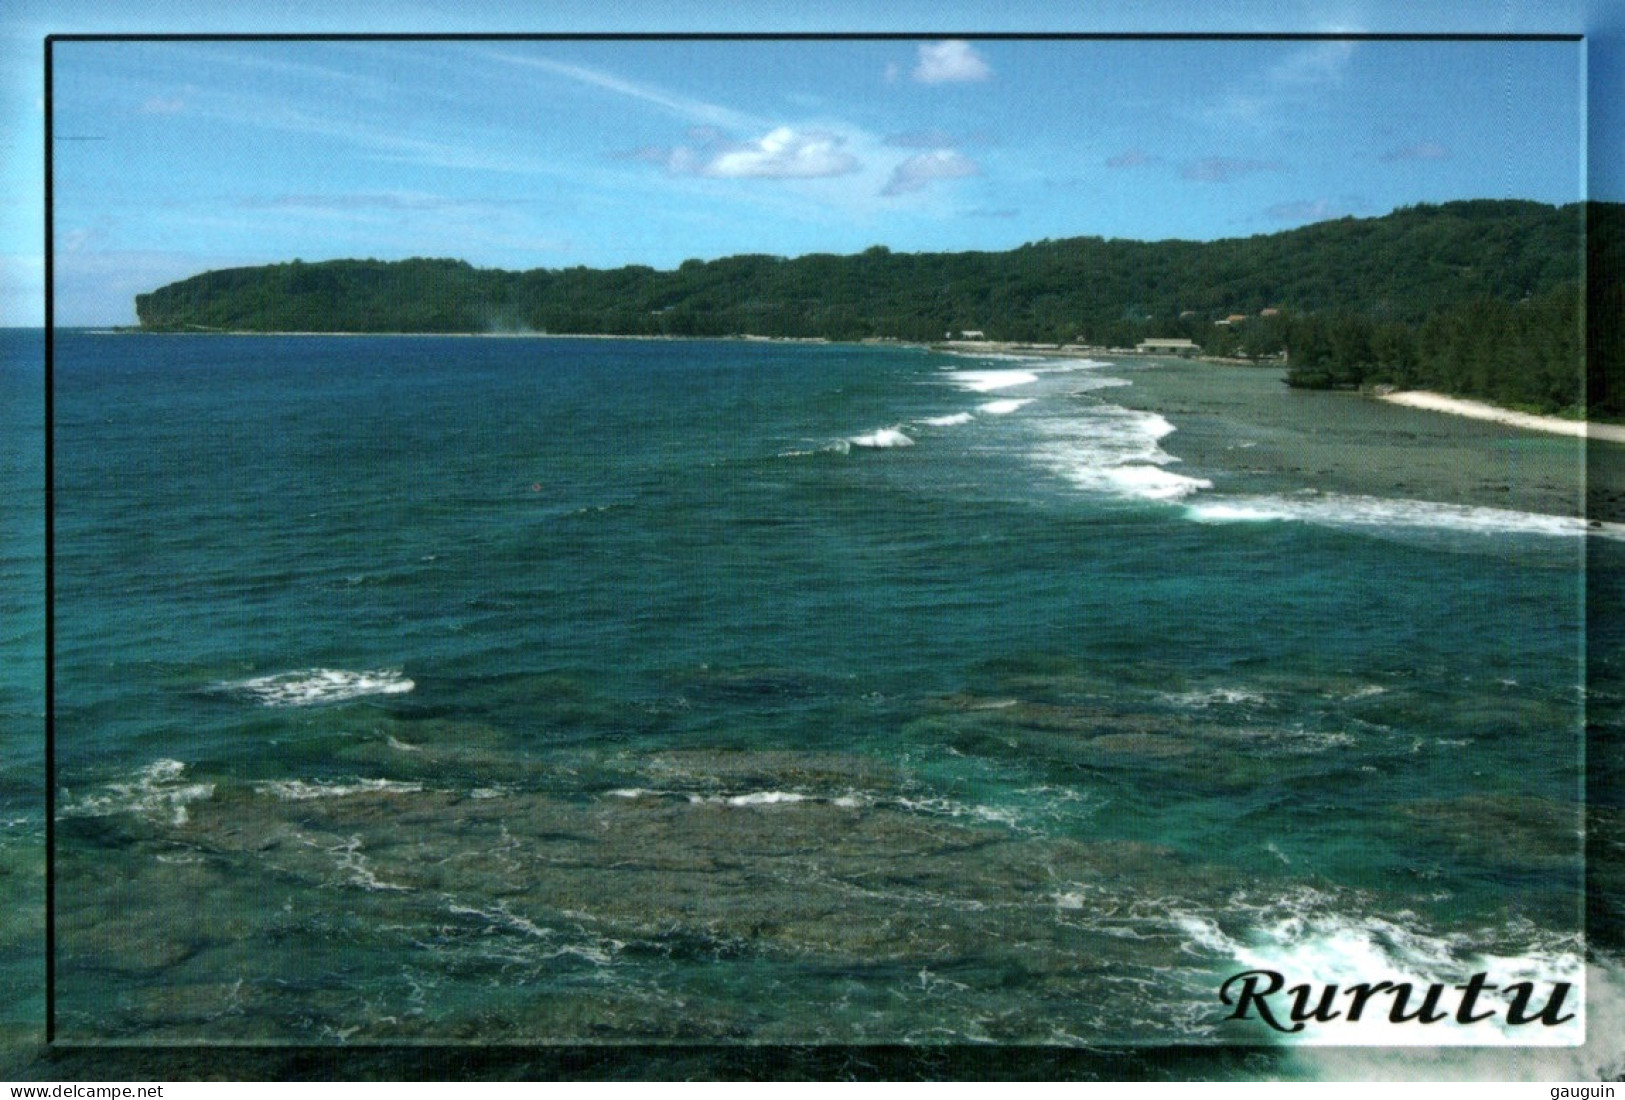 CPM - RURUTU - Baie De MOERAI - Photo RC.Wymann - Edition STP Multipress - French Polynesia